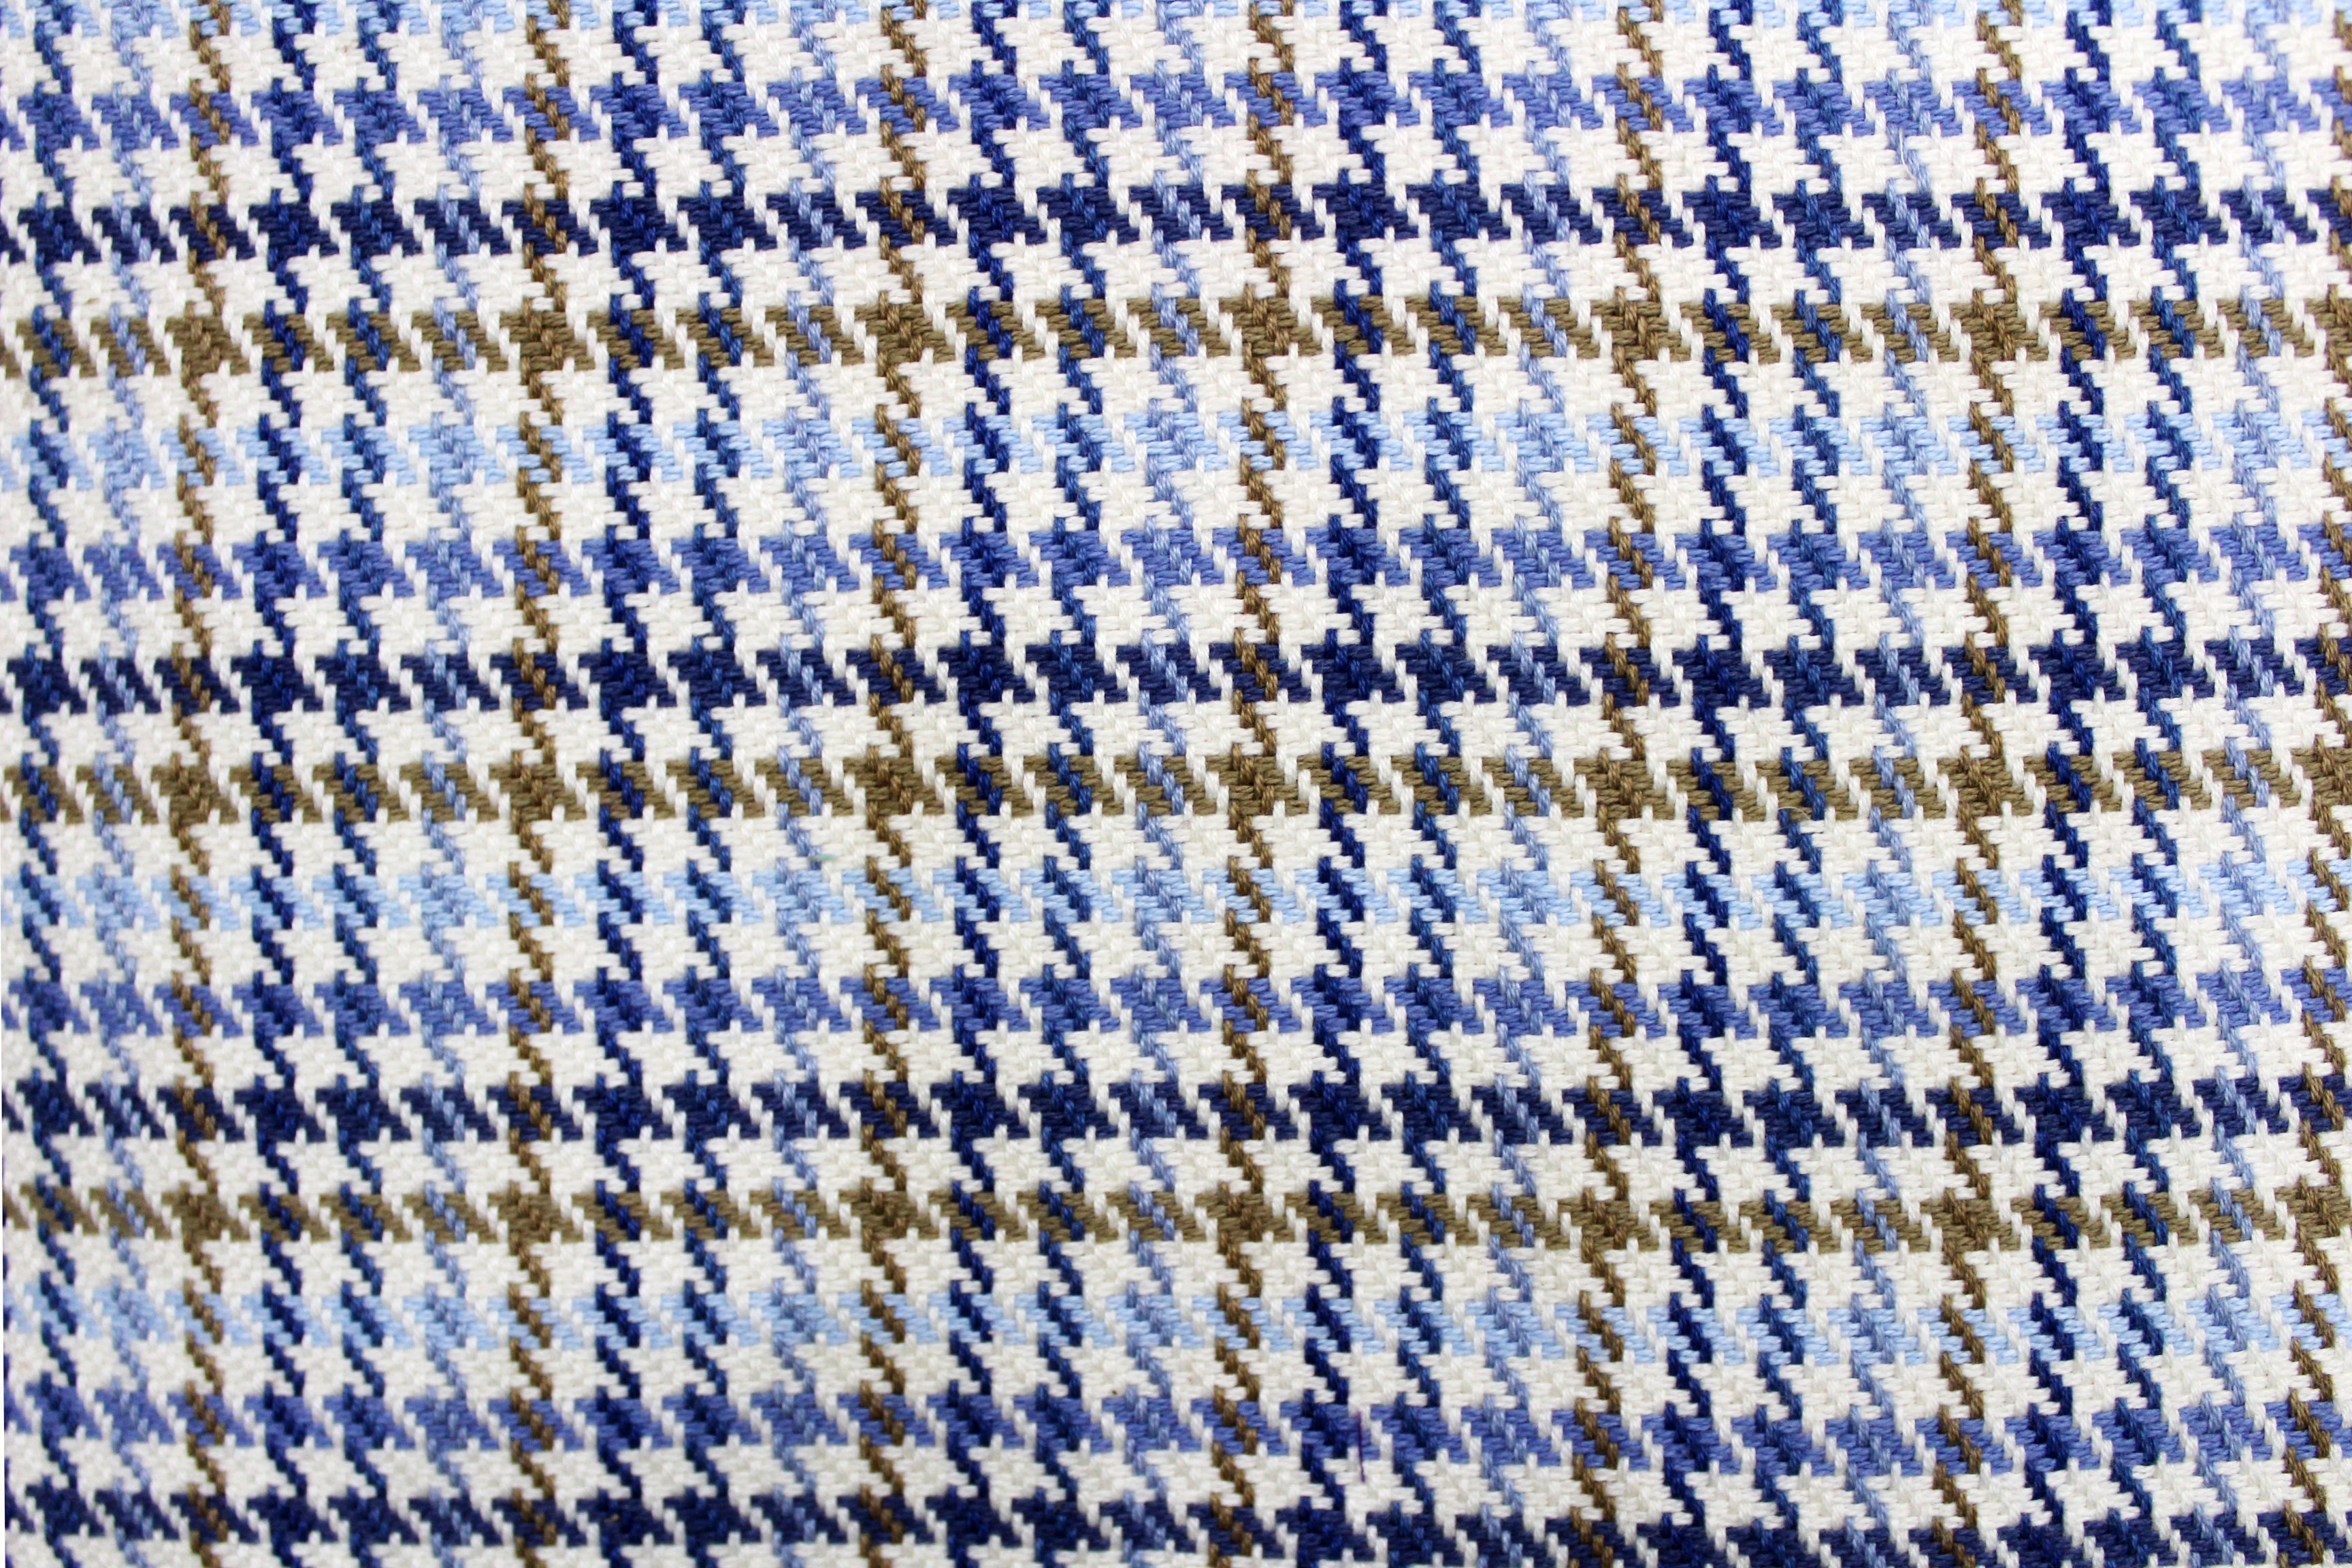 ALPHA Woven Cotton Check 2 Pcs Cushion Cover set - Blue